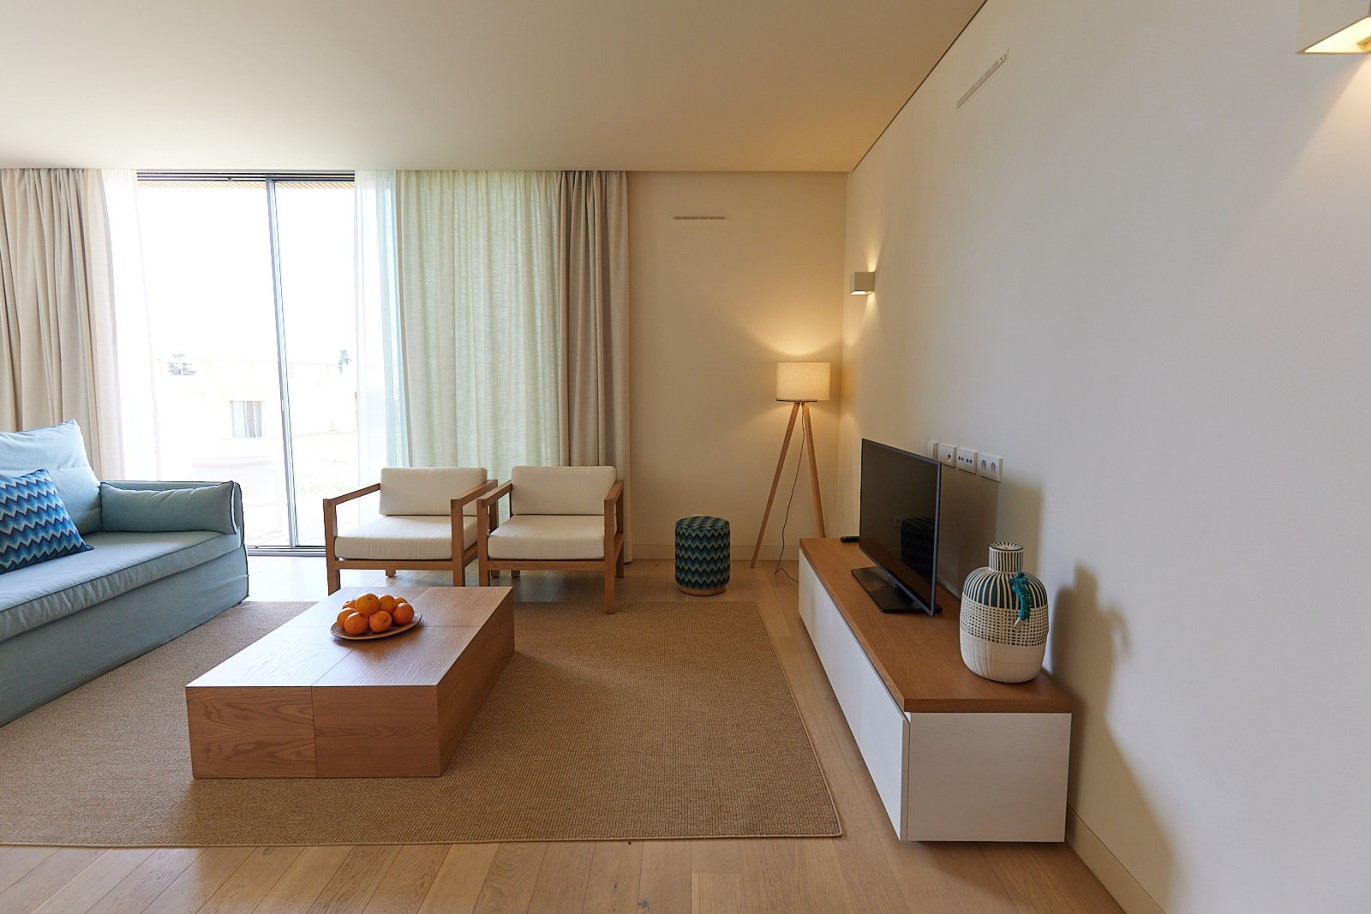 2 bedroom apartment in resort, for sale in Porches, Algarve_229120